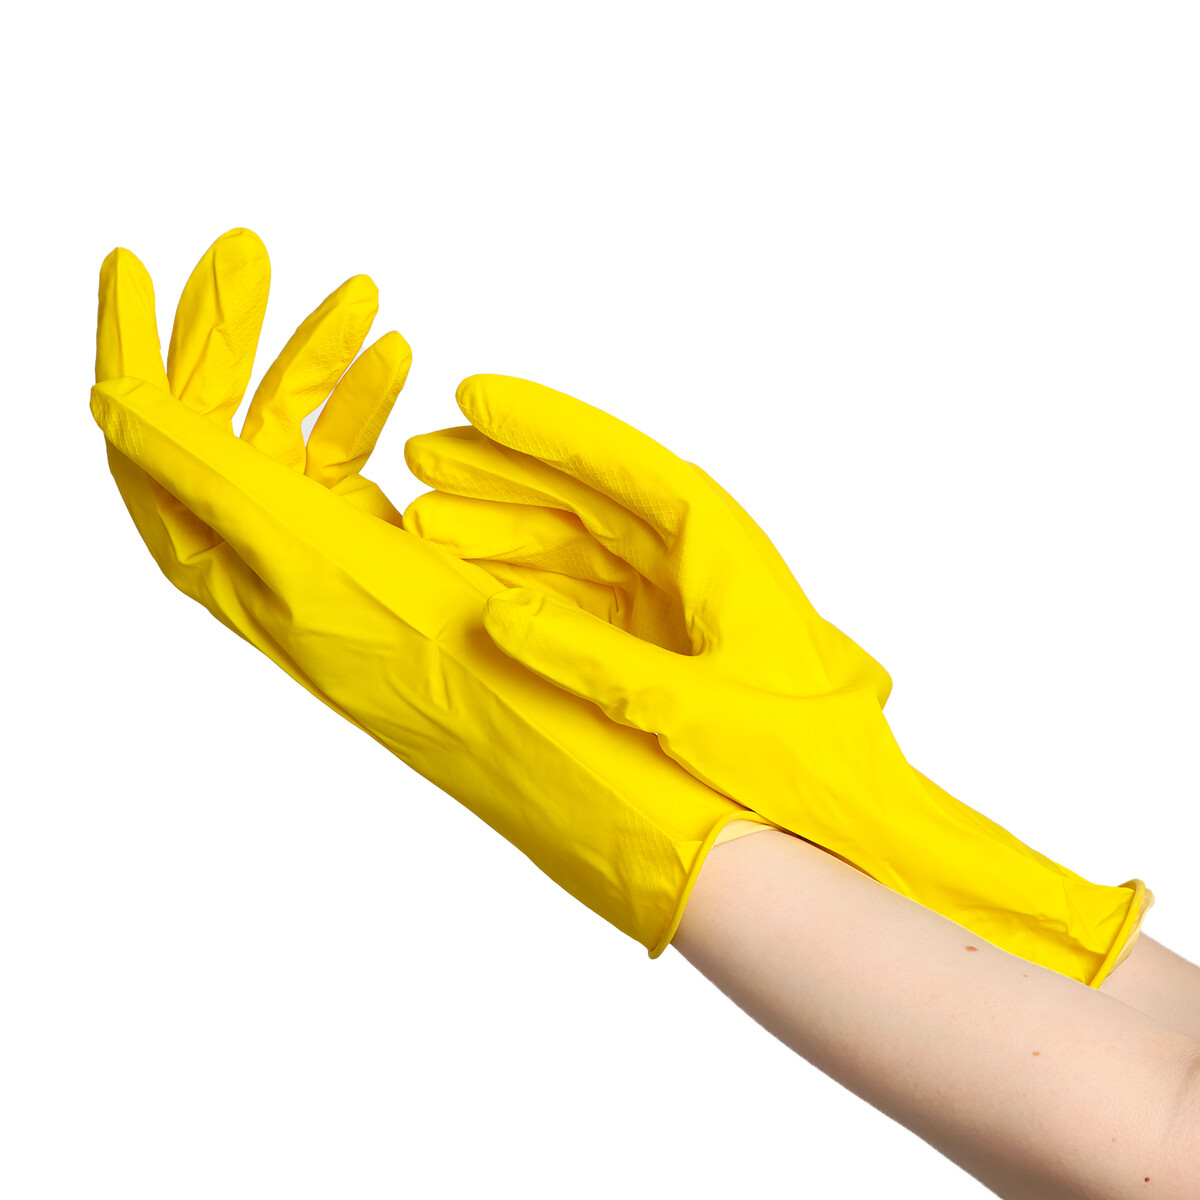 Перчатки латексные хозяйственны размер m, 30 гр, цвет желтый перчатки хоз латексные лайма премиум многоразовые х б напыл суперплотные хl оч большой 600781 12шт партия